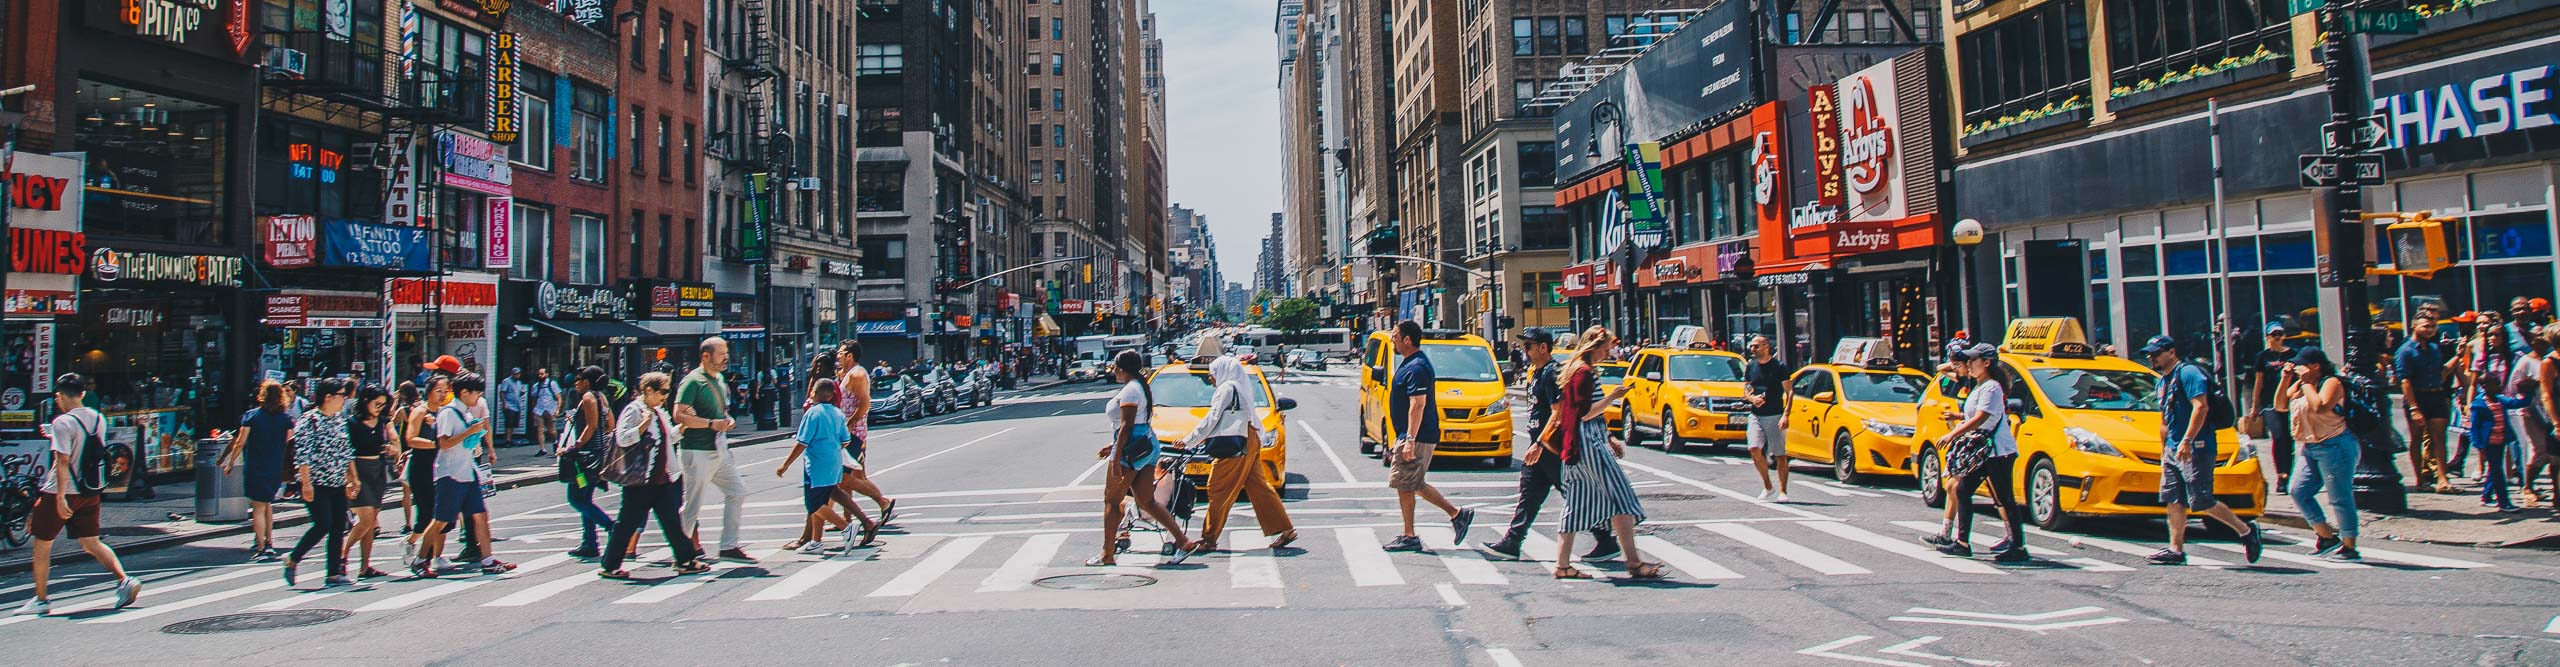 People crossing busy New York street